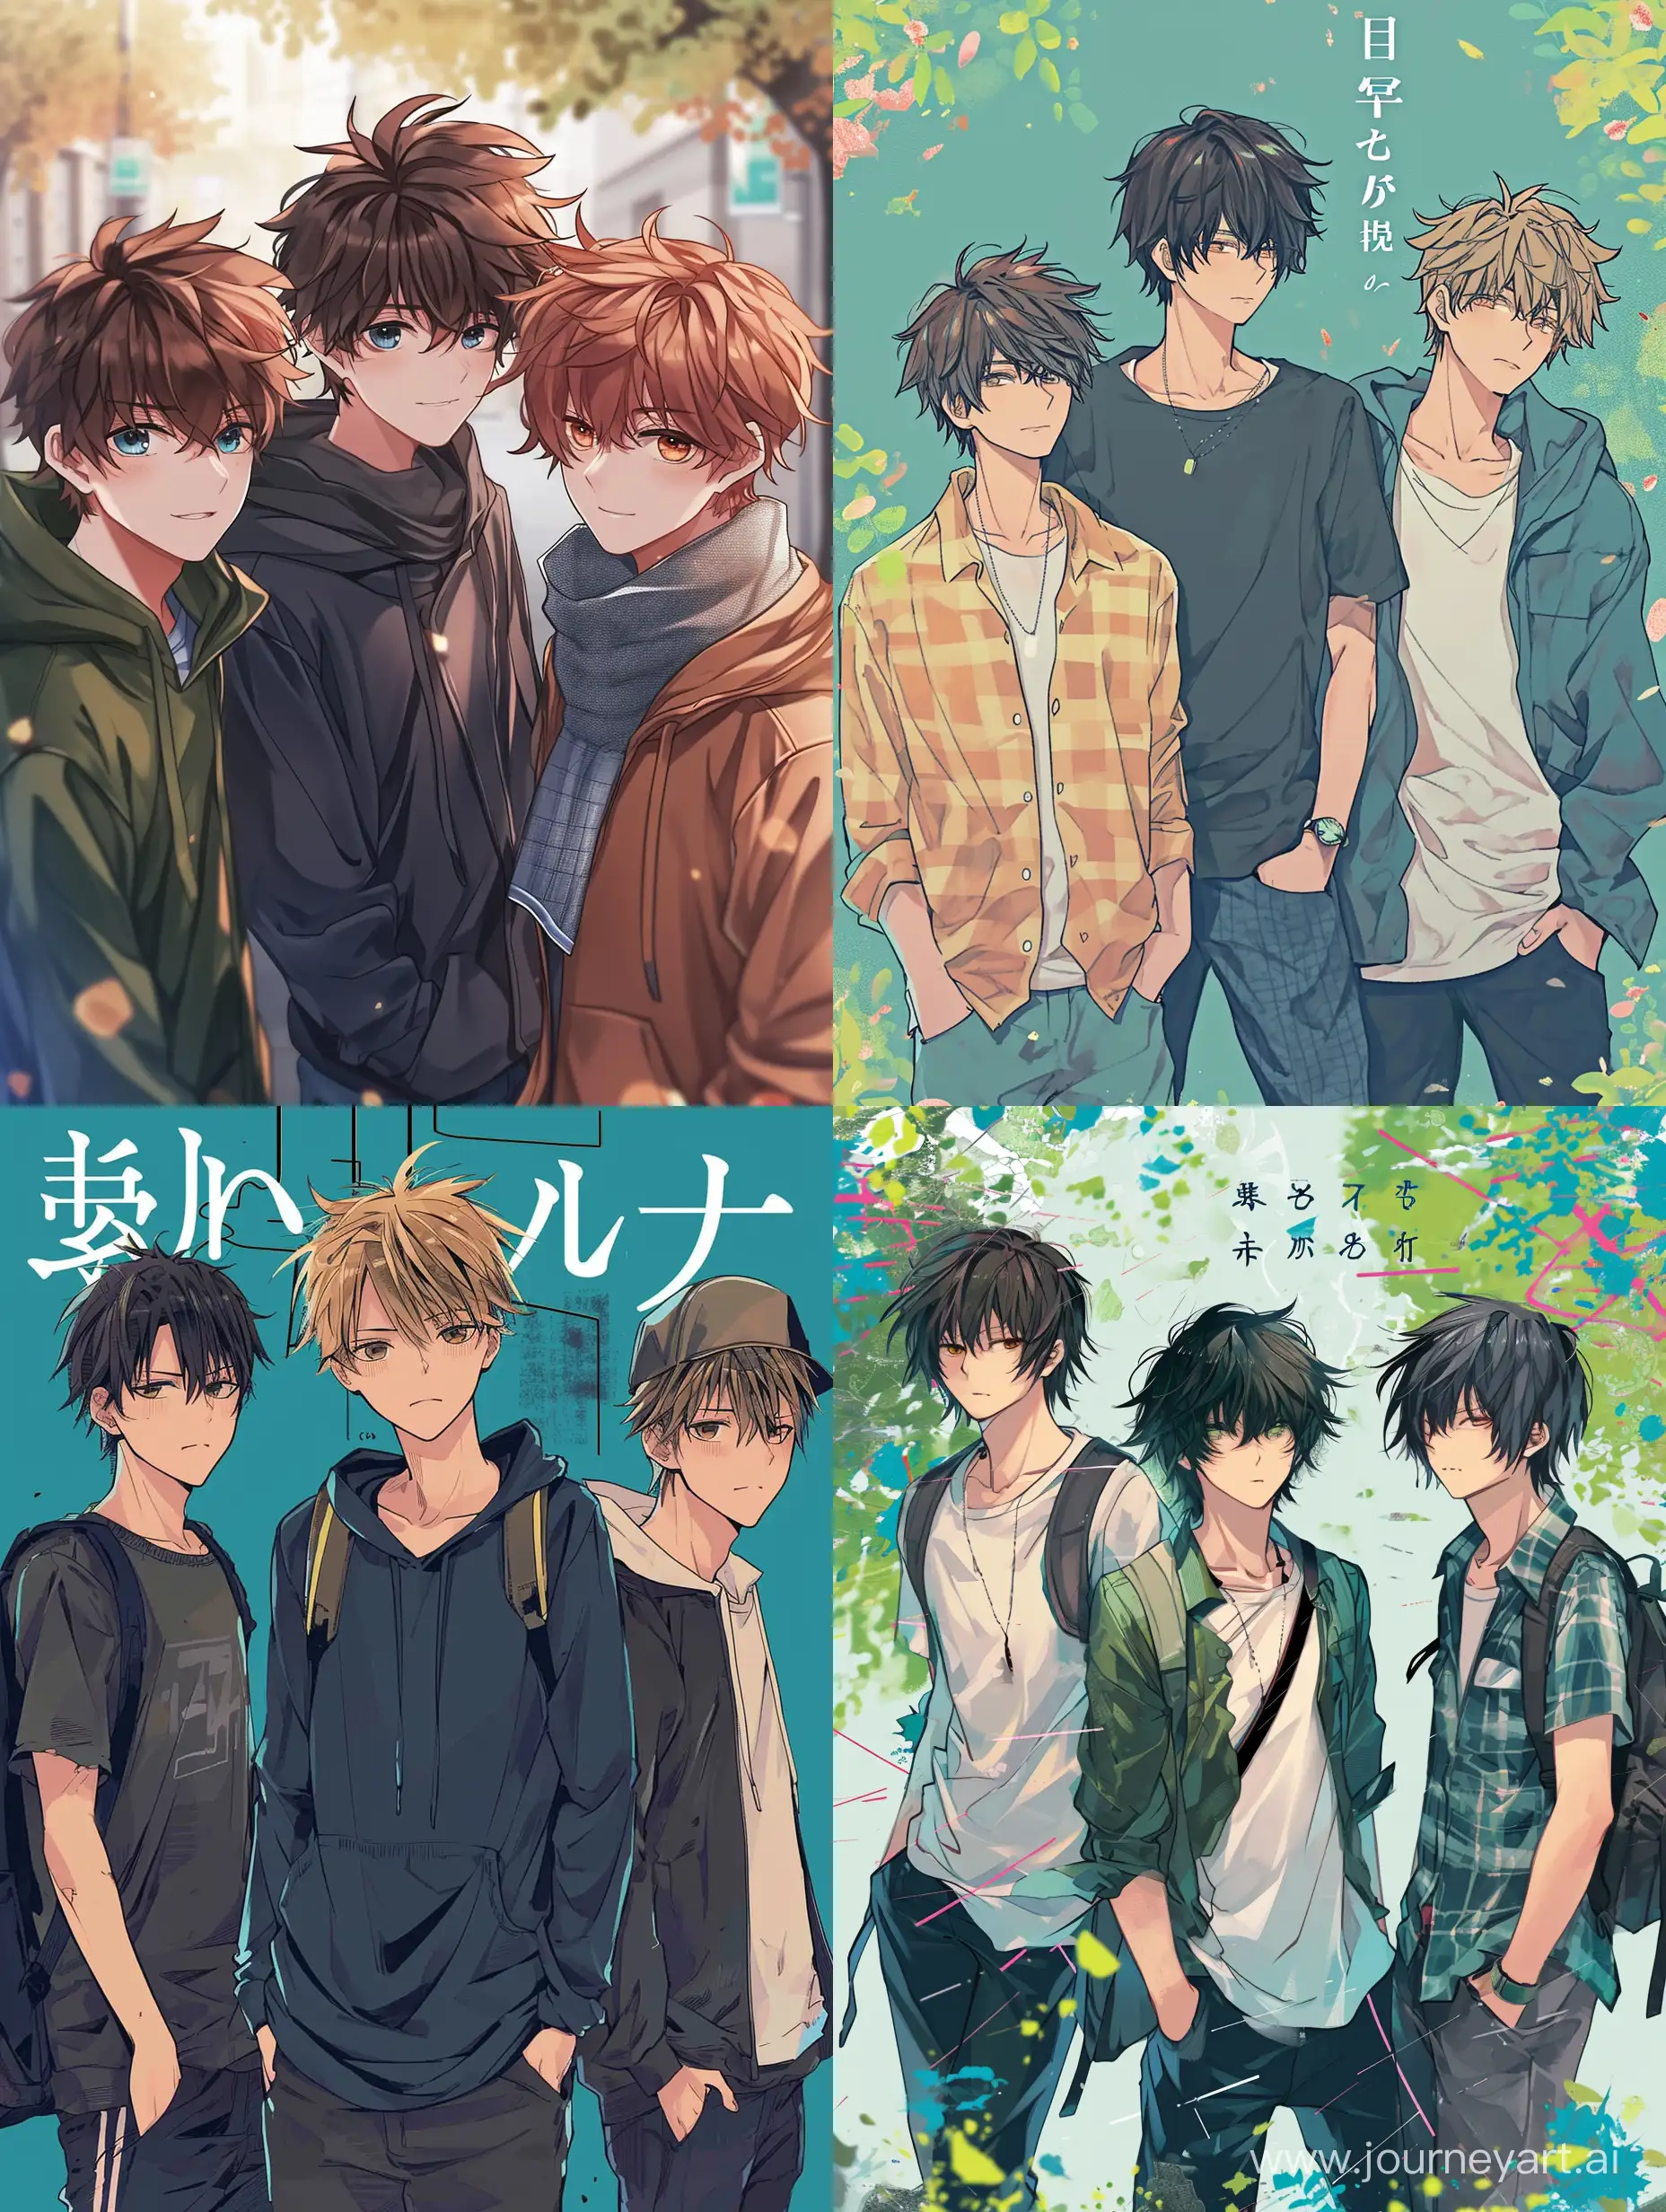 Anime-Manga-Cover-featuring-Three-Boys